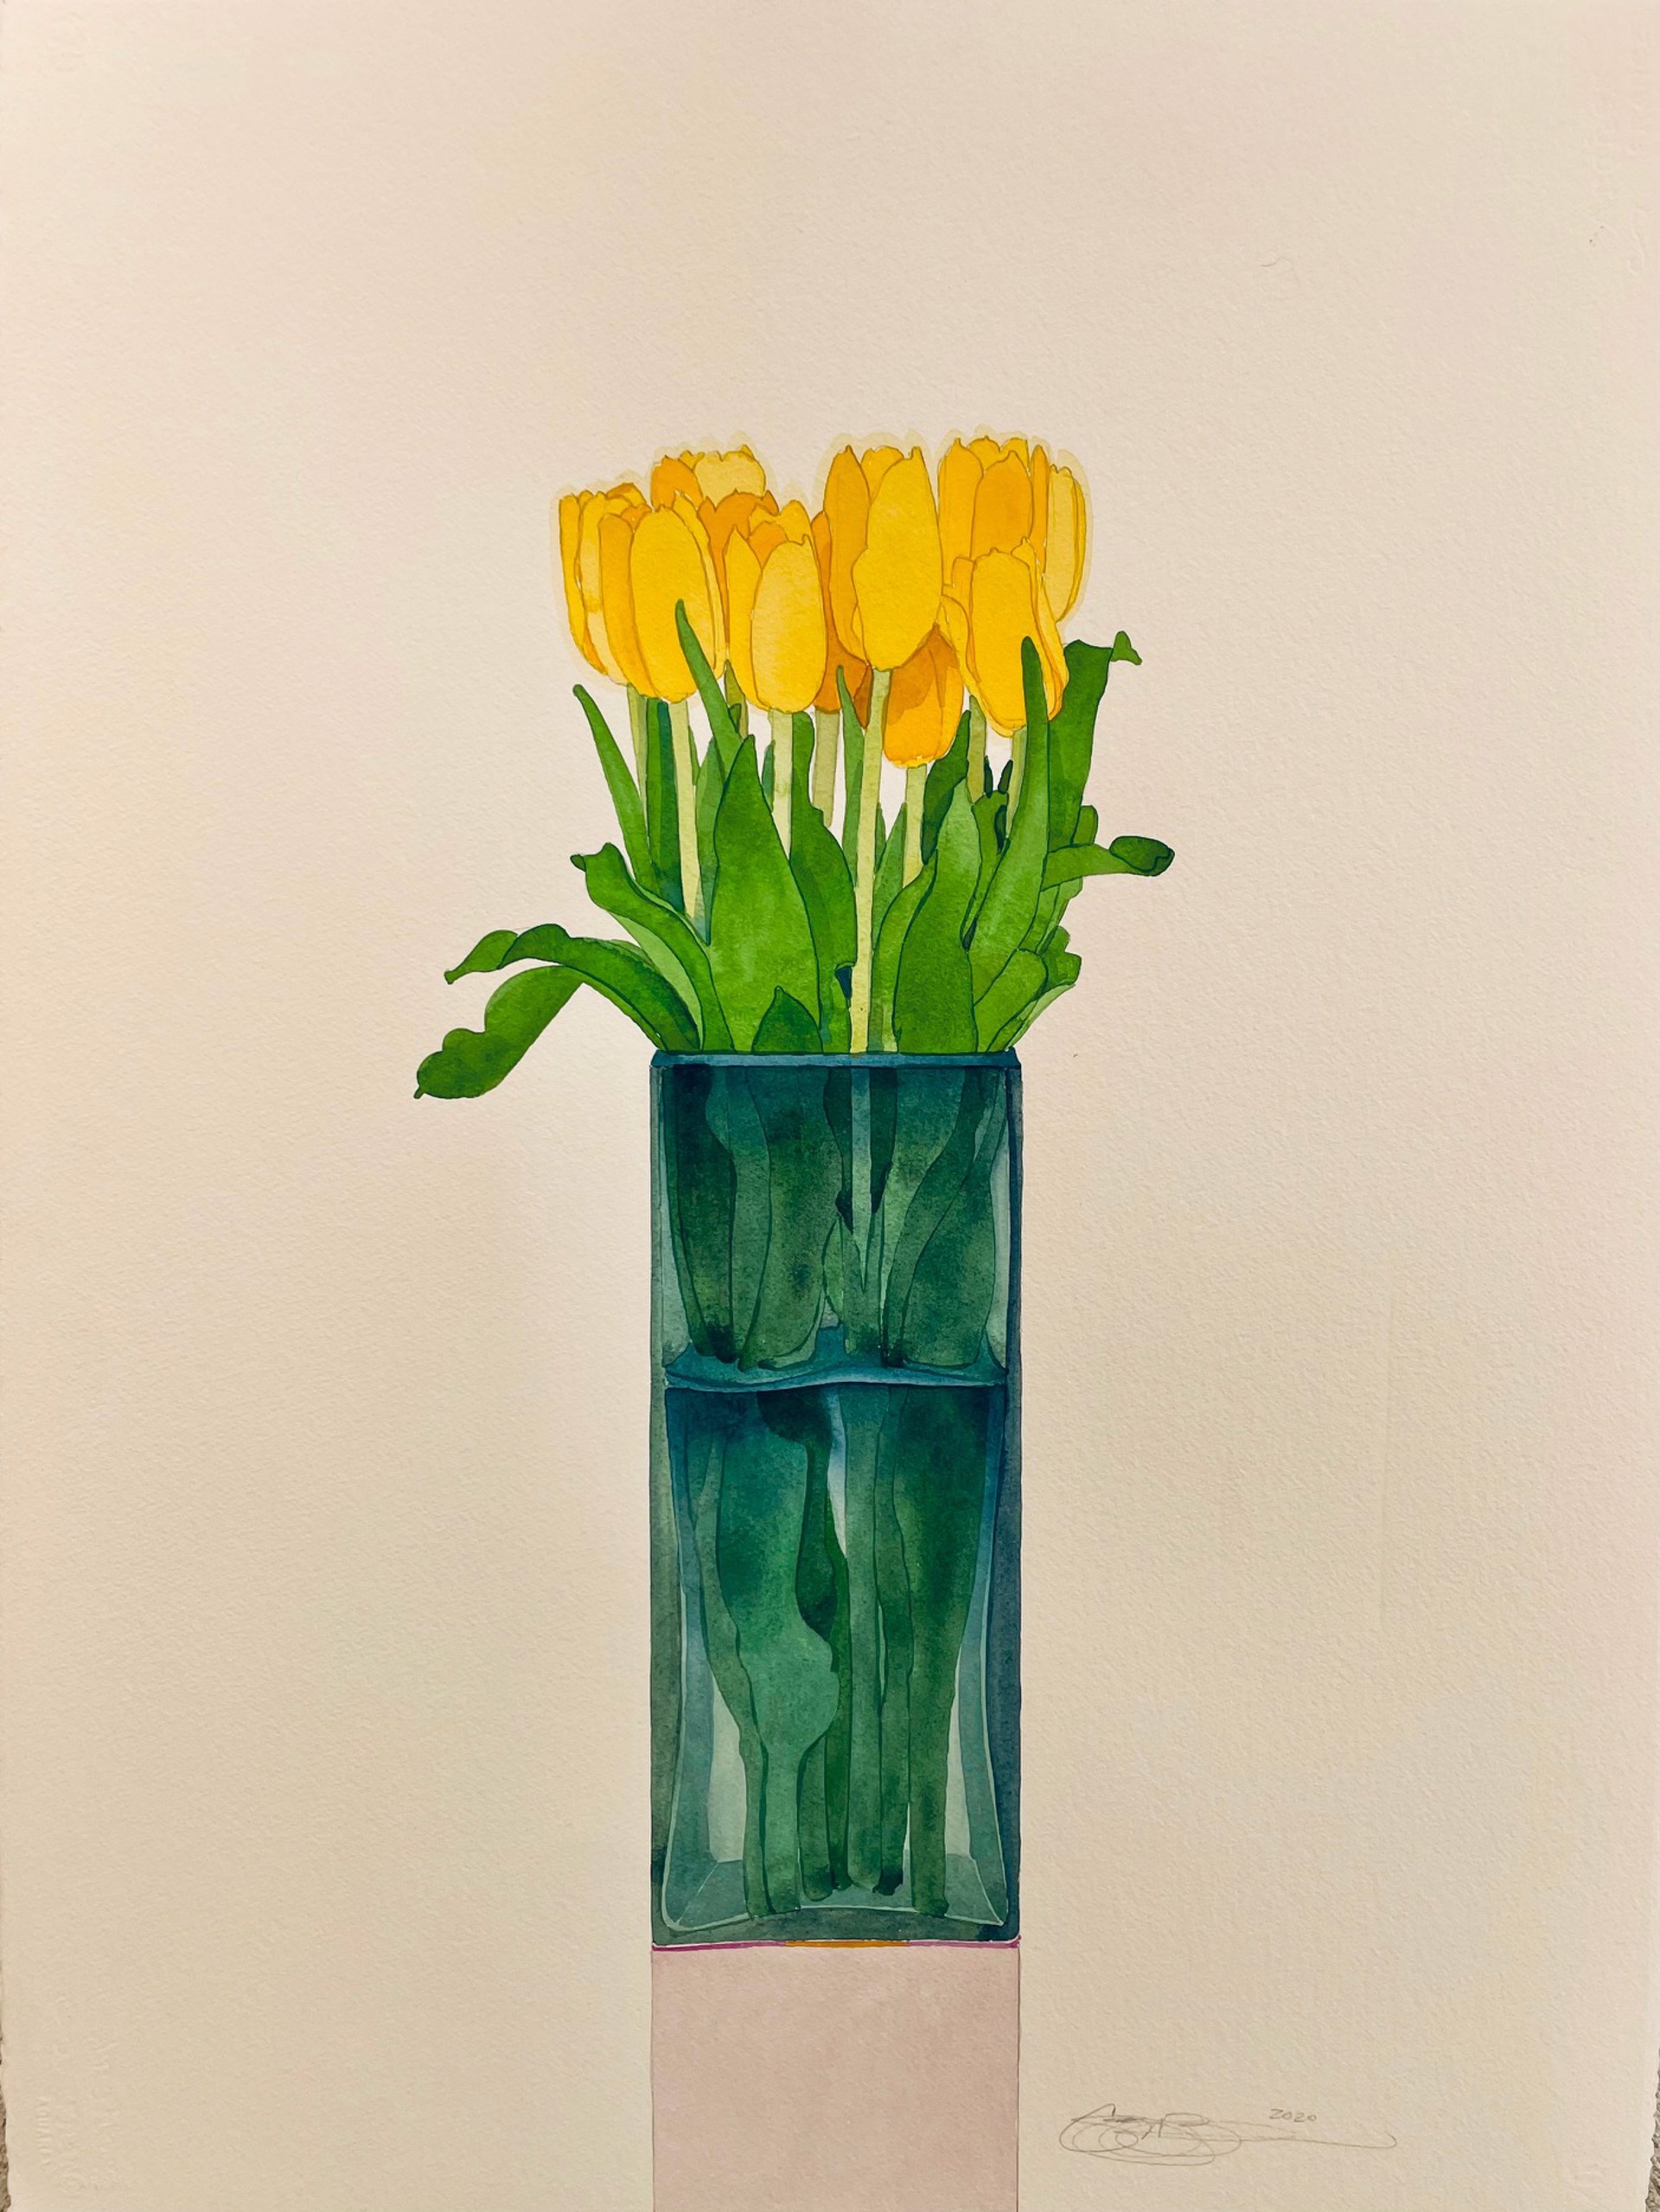 Still life with Yellow Garden Tulips (unframed) by Gary Bukovnik